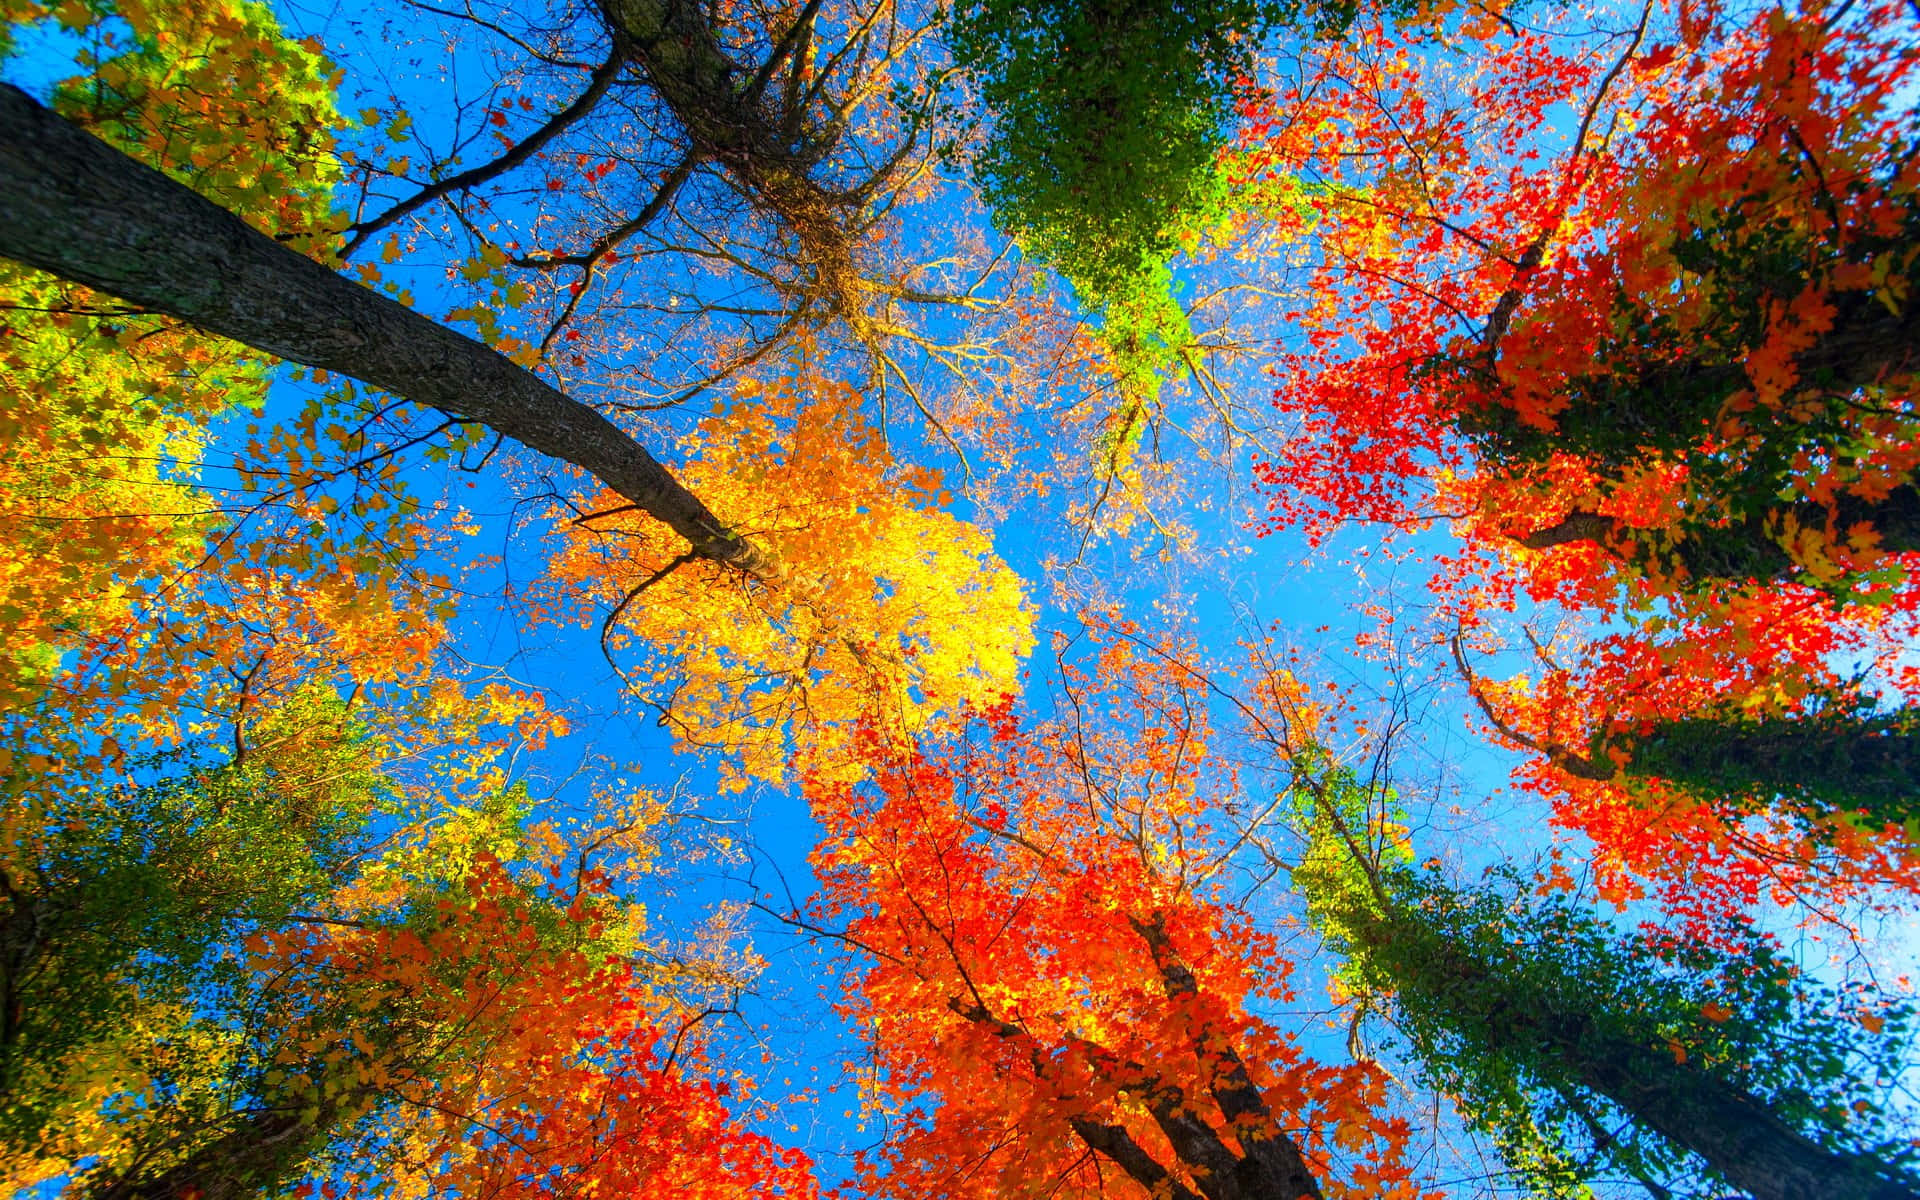 "A beautiful, vibrant Autumn leaves backdrop"